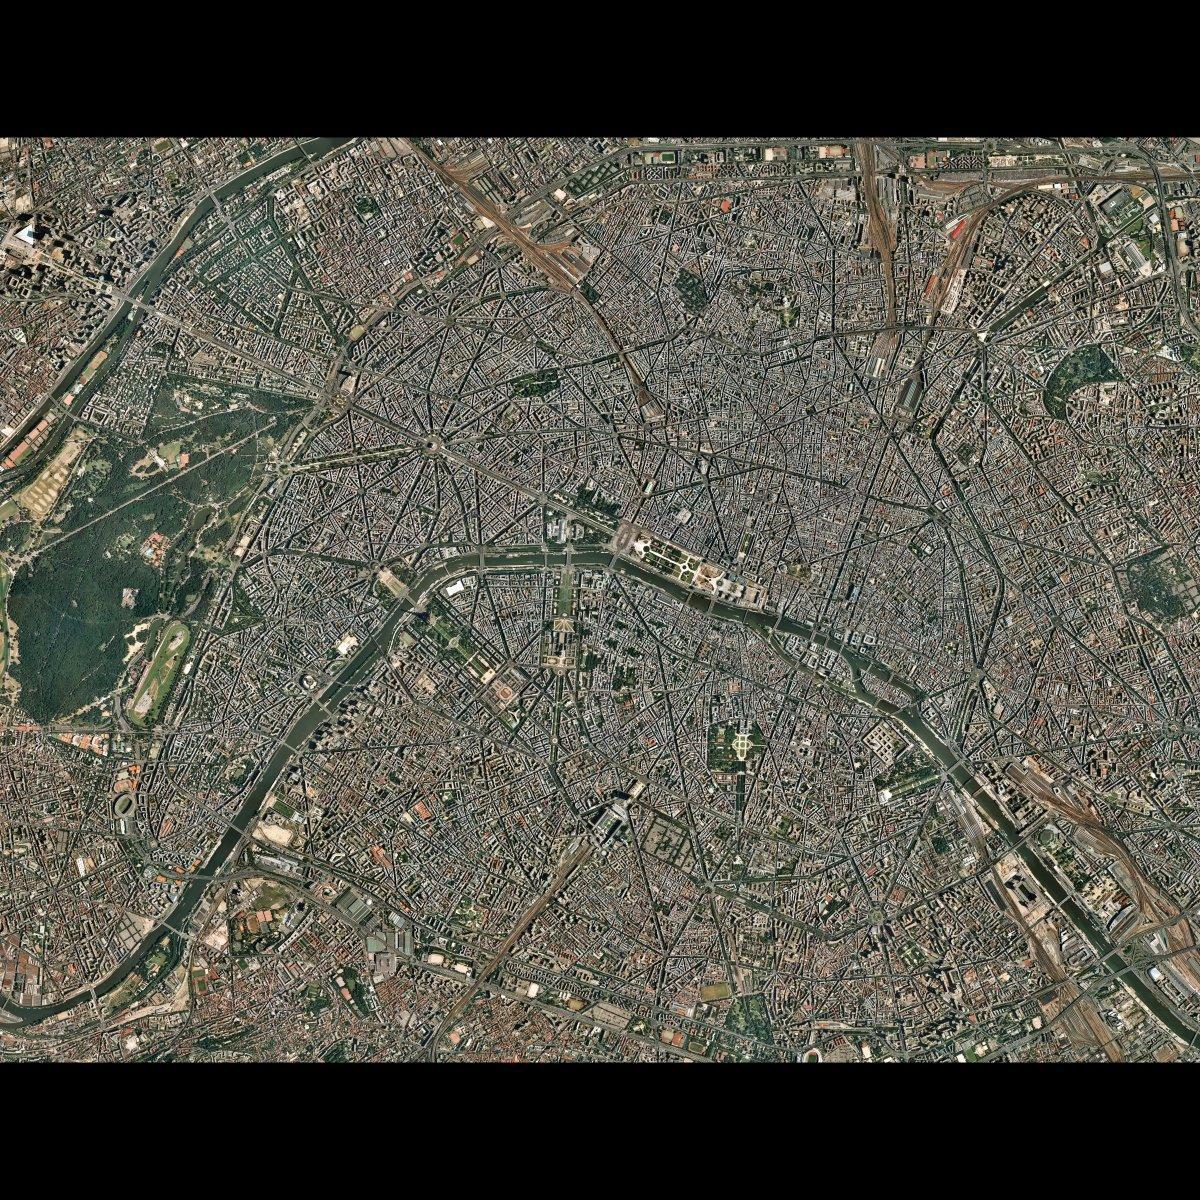 Mapa de satélite de París